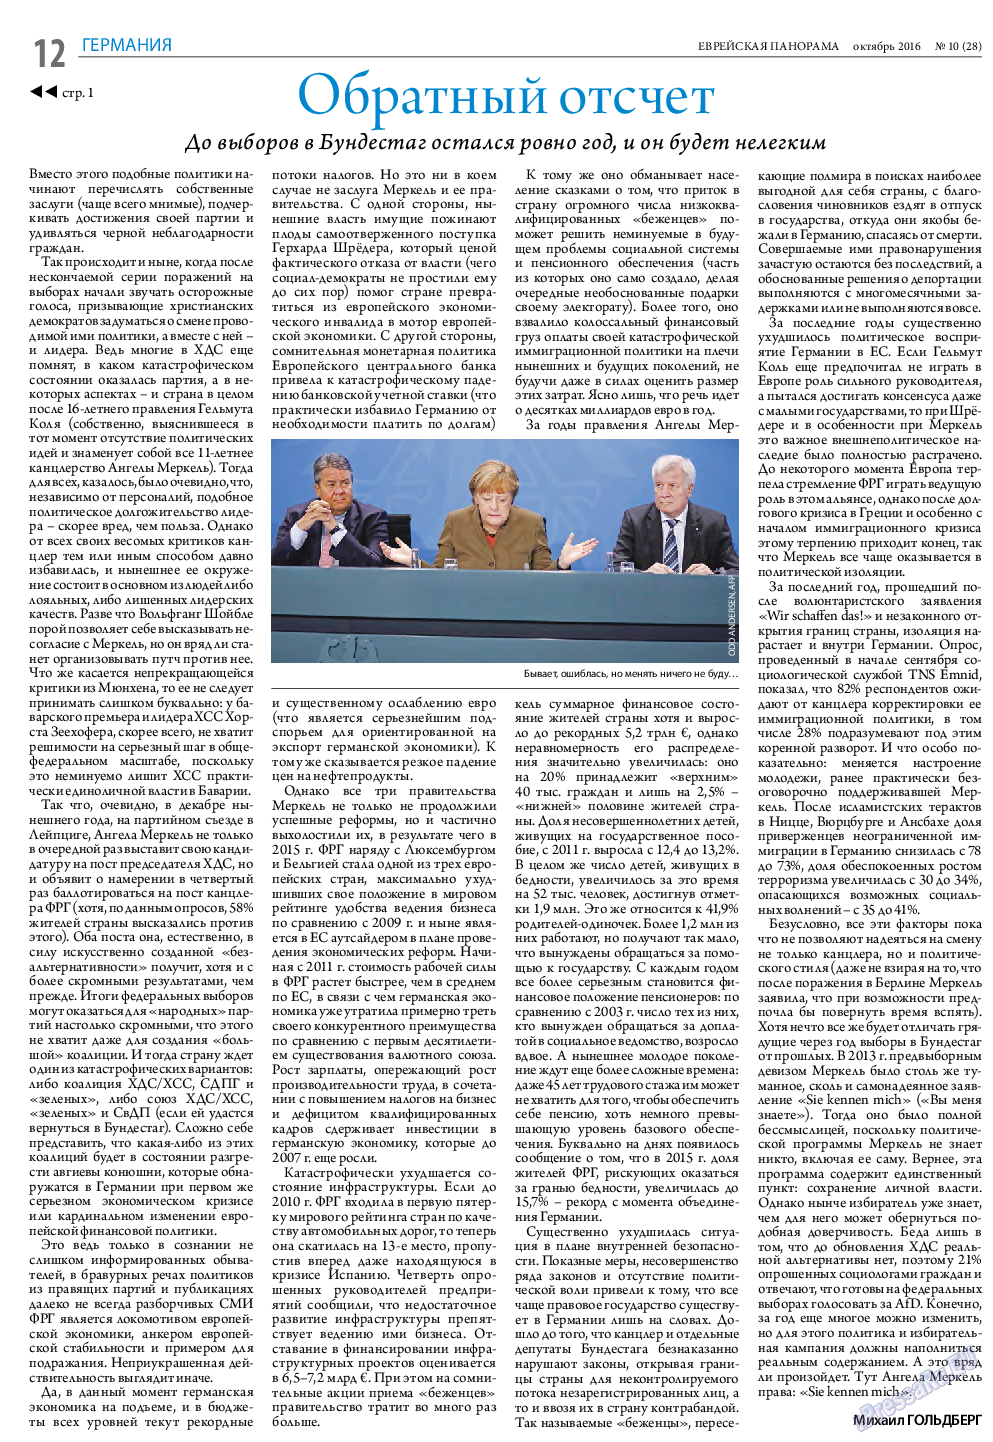 Еврейская панорама, газета. 2016 №10 стр.12